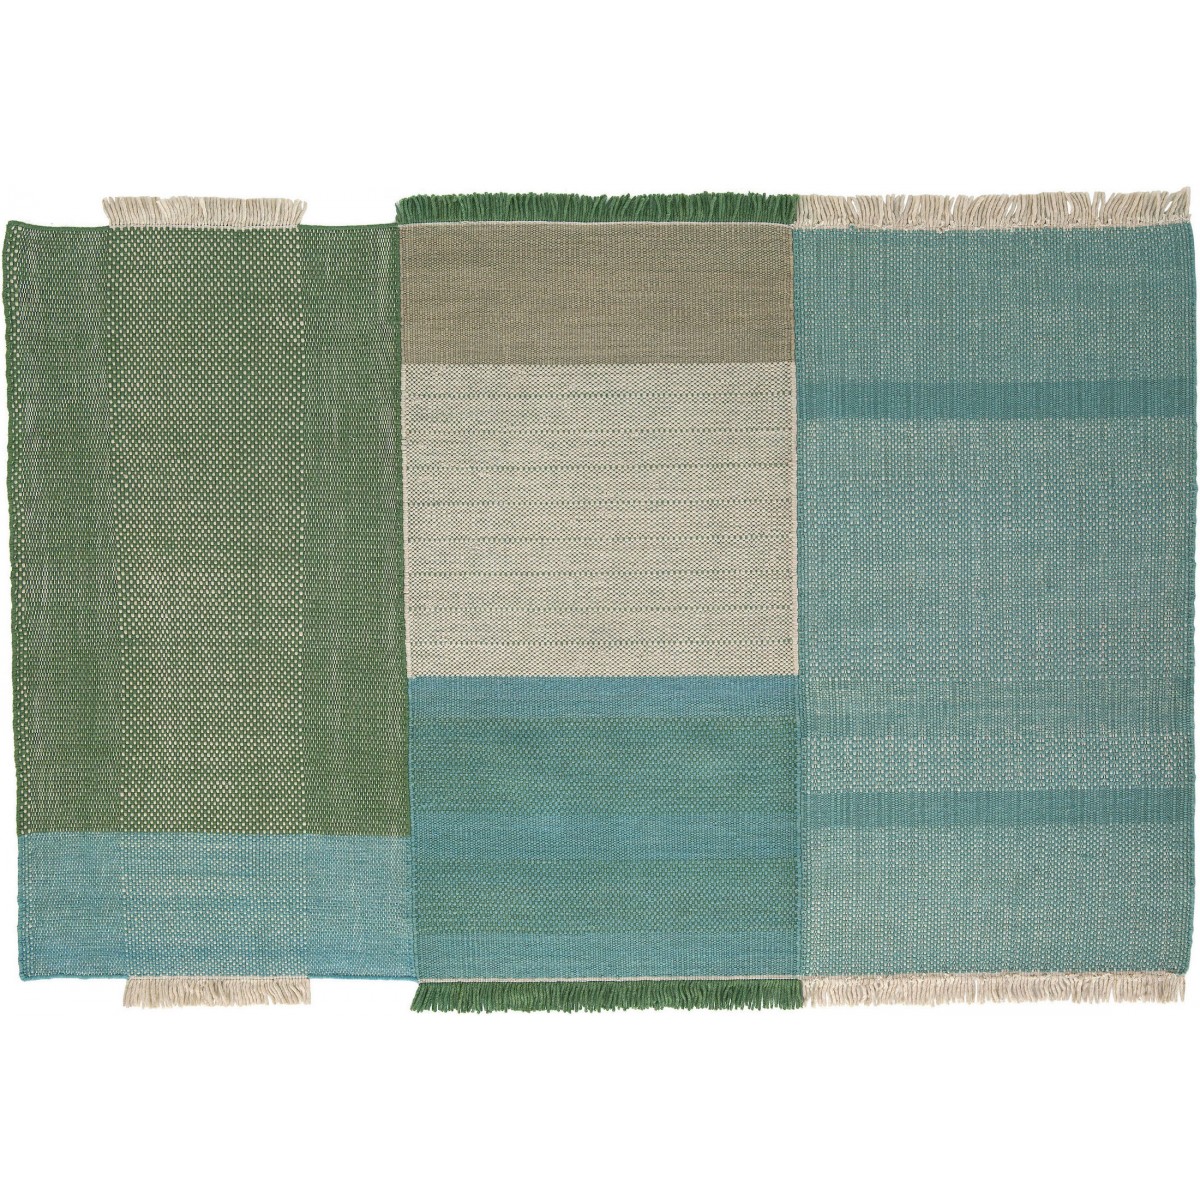 170x240cm - green - Tres rug